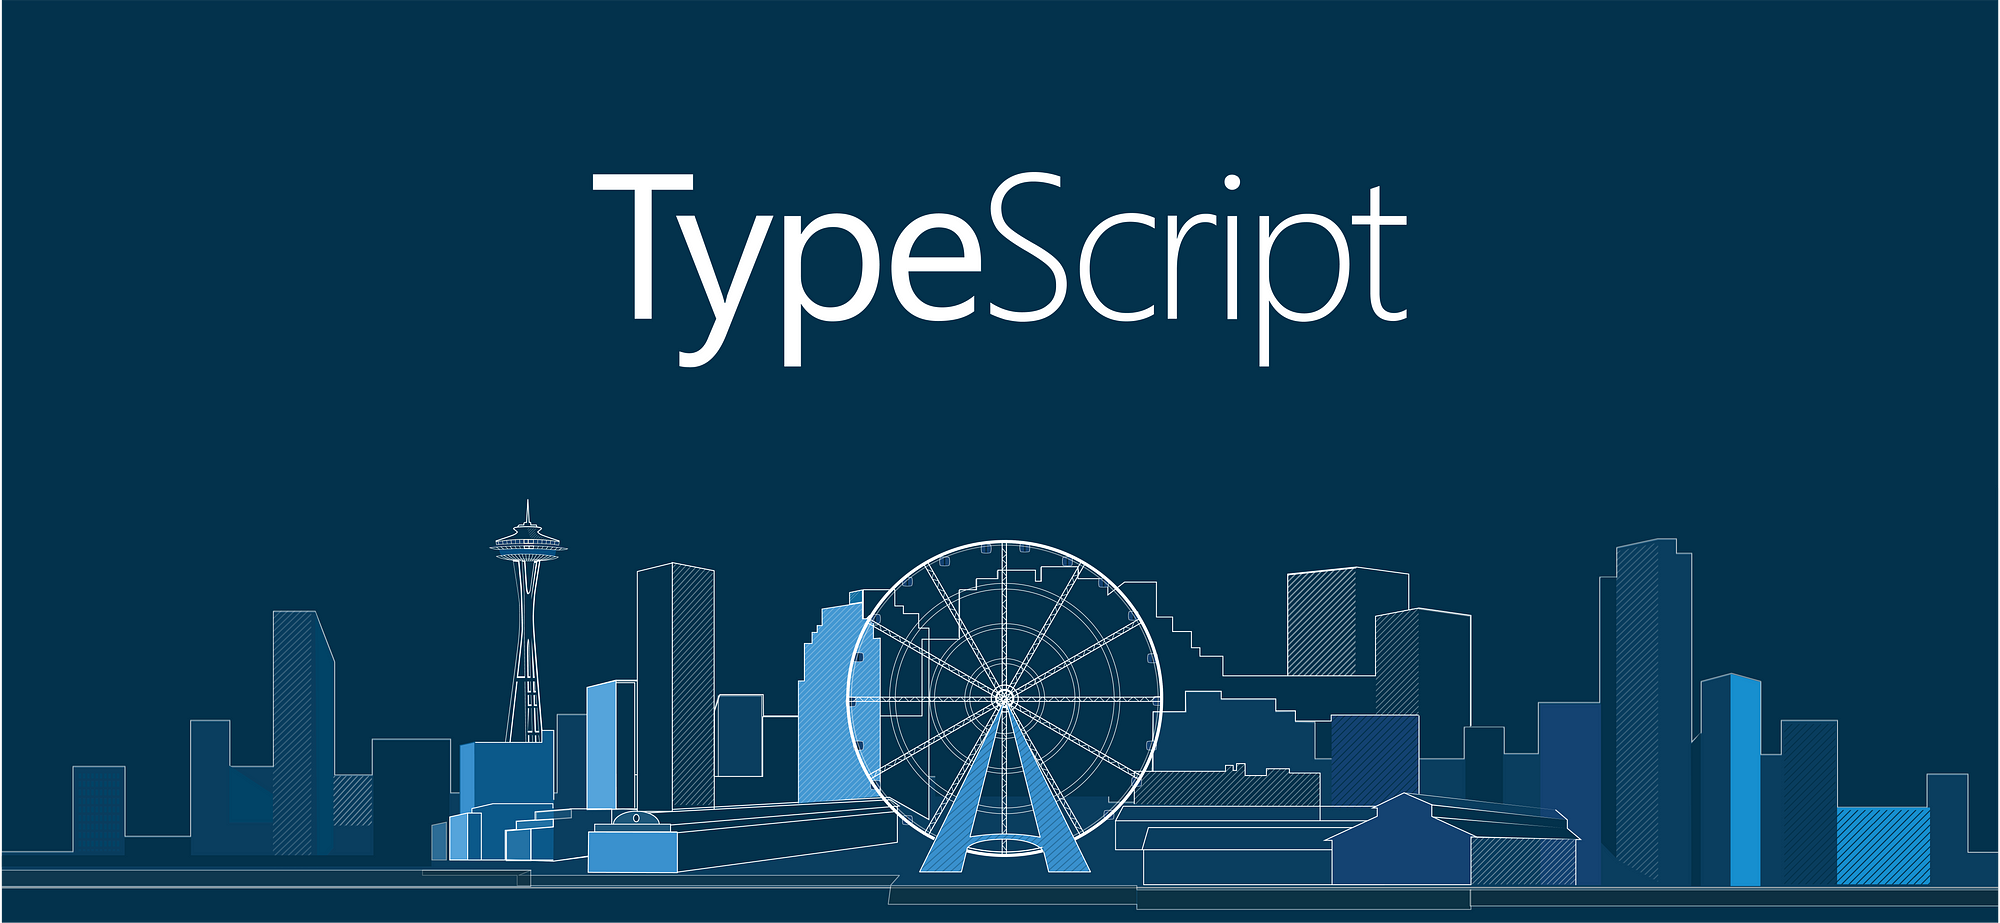 typescript - Page 1 - Brian Yang
